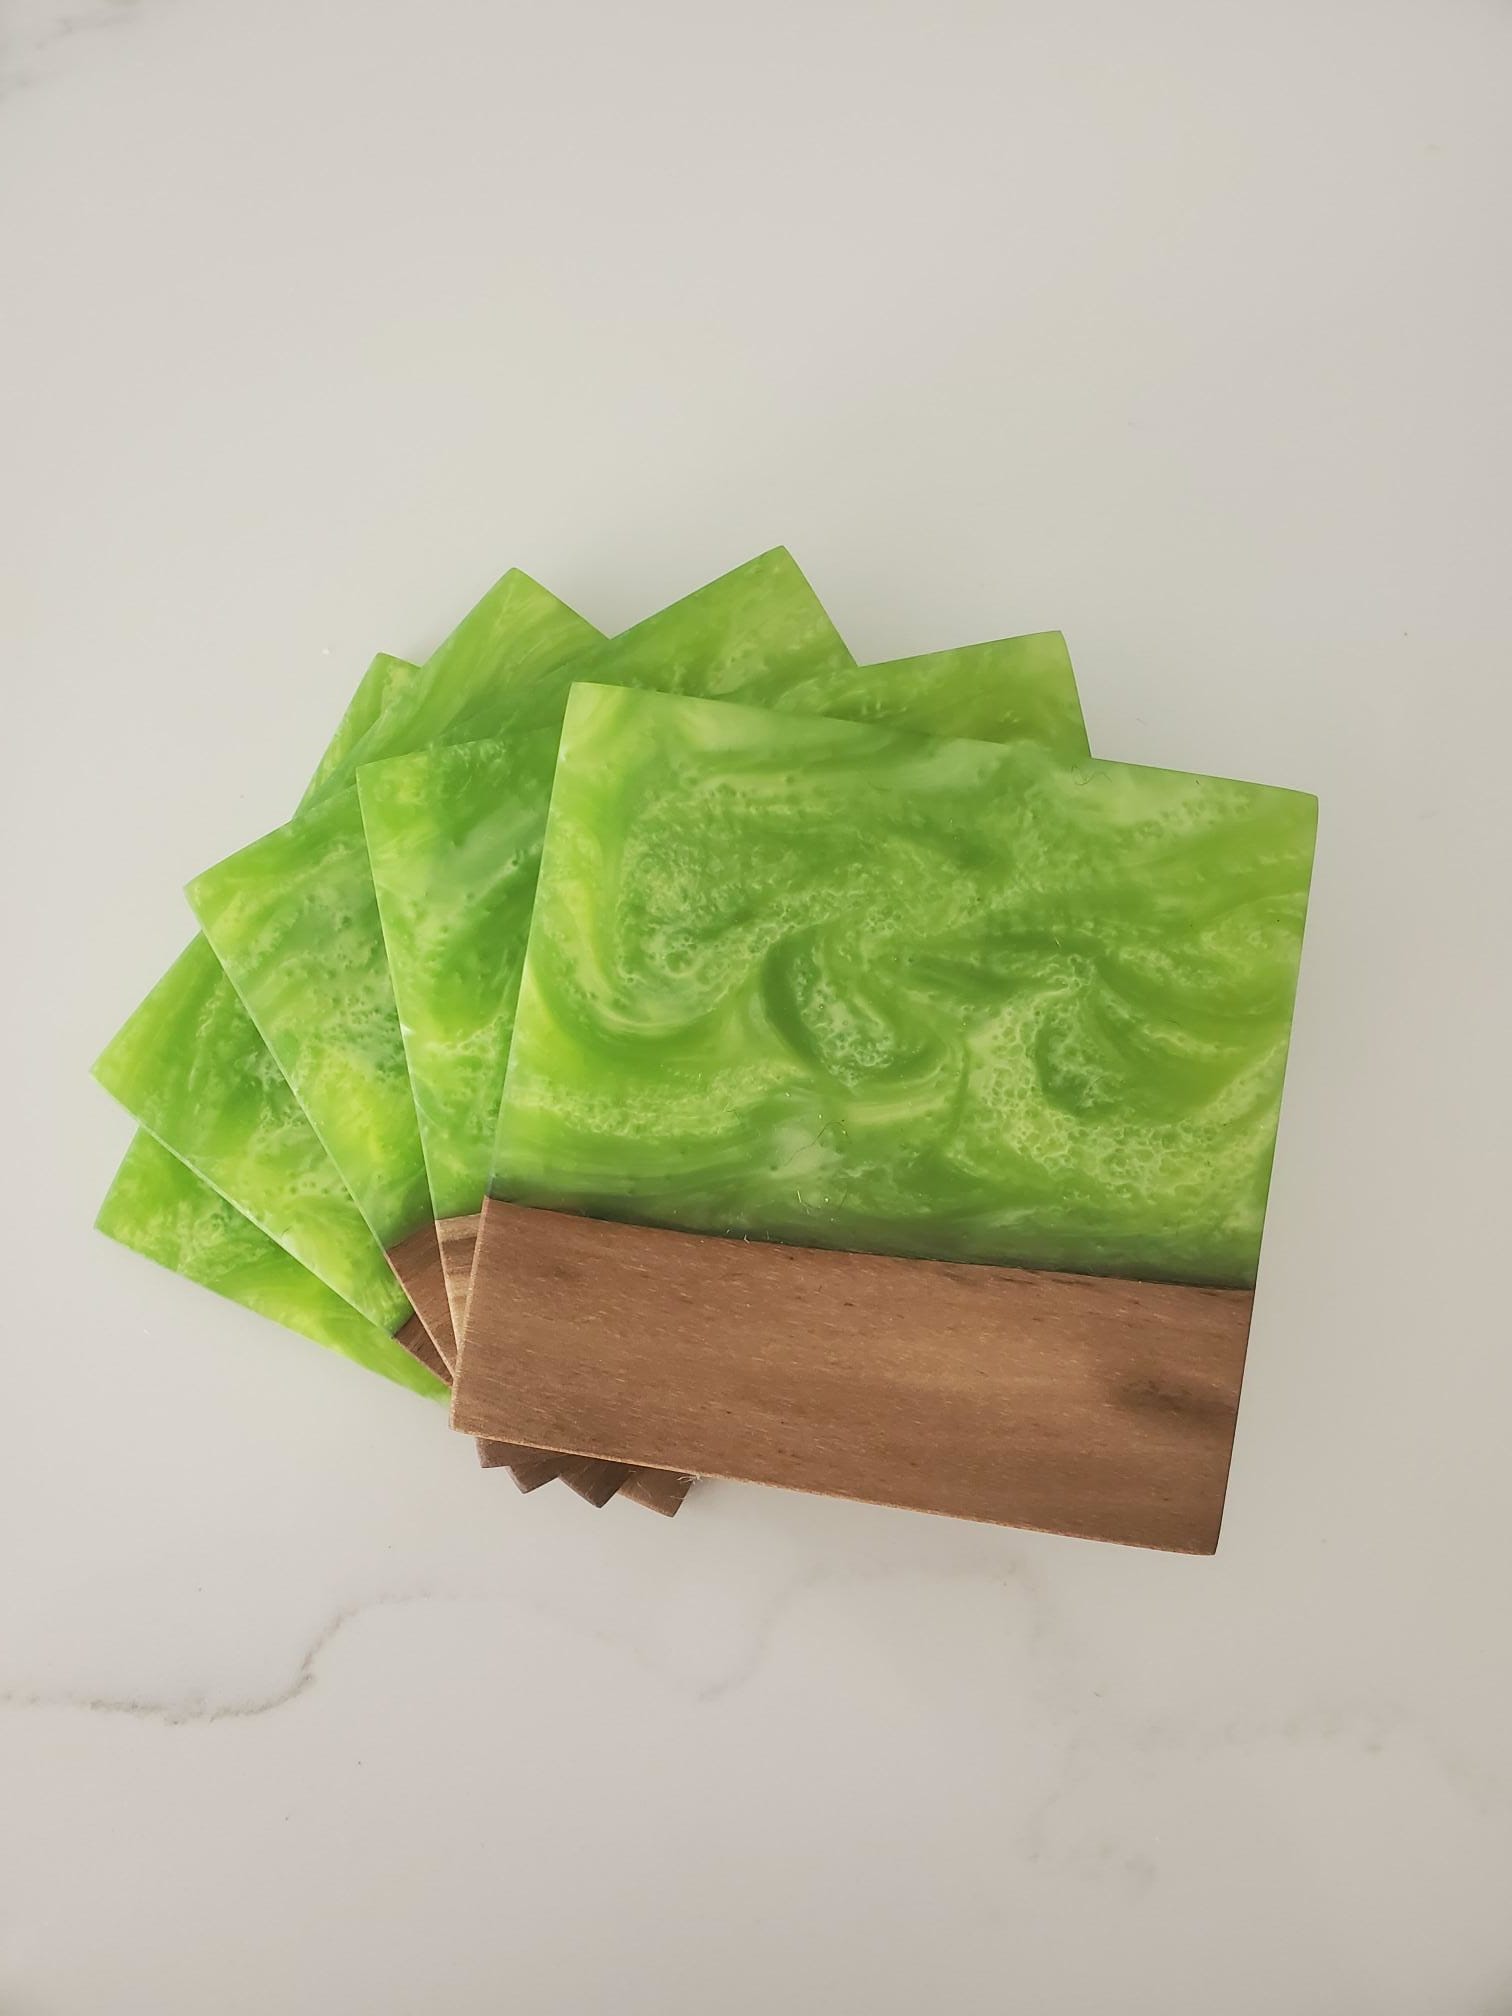 Green Tea/Walnut set 5 pieces - Custom Coaster Sets - Its Just Wood by ...